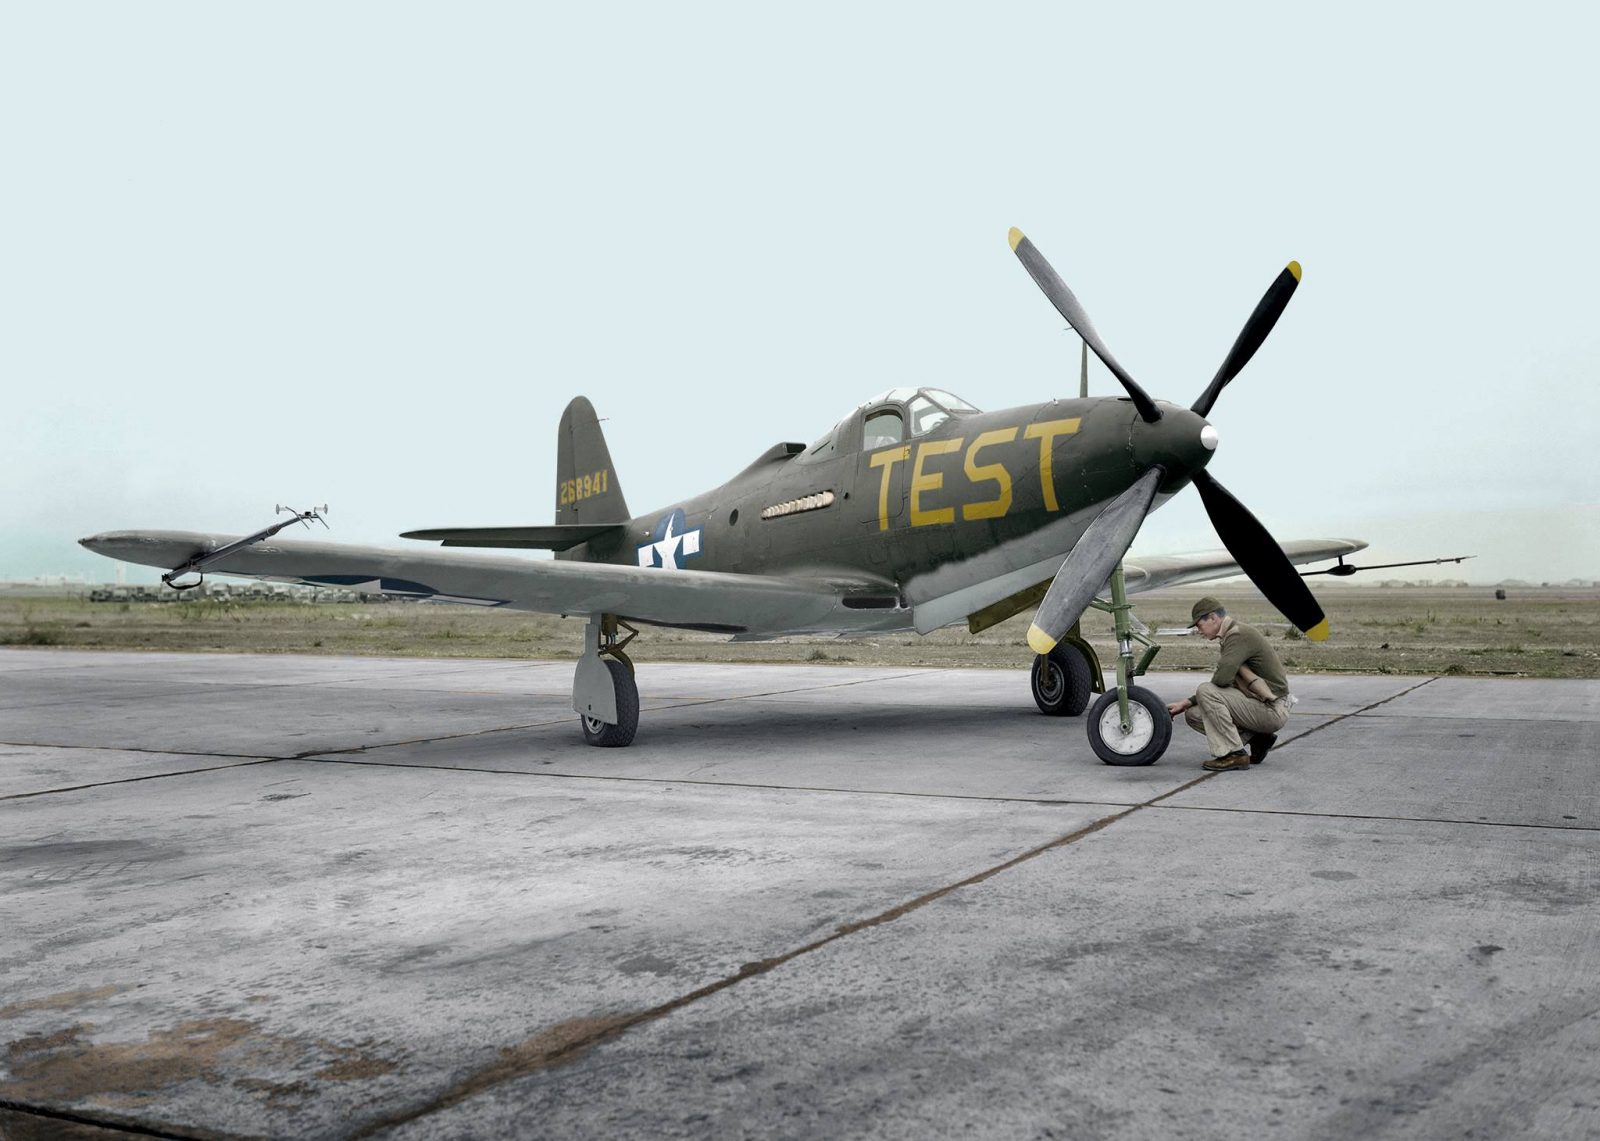 P-63-NACA-TEST-COLOR-1600x1141-1.jpeg